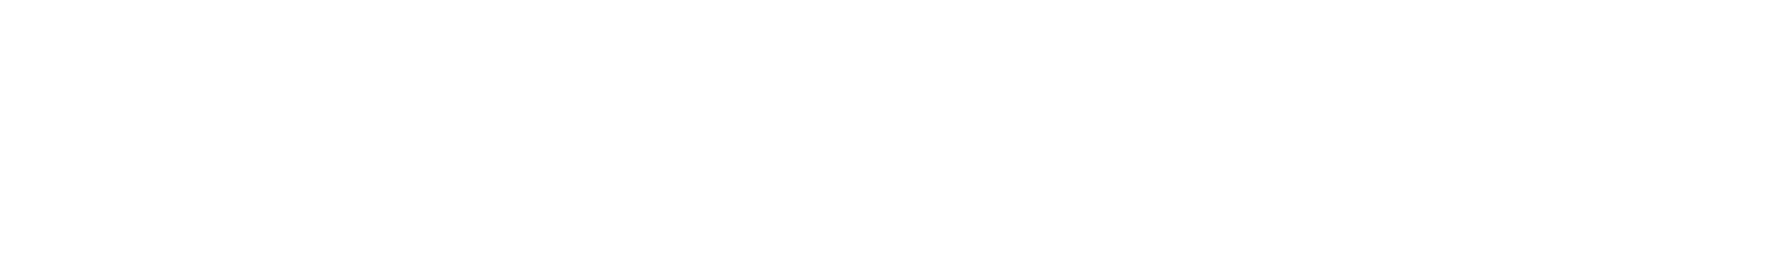 Fulfilment People Logo White